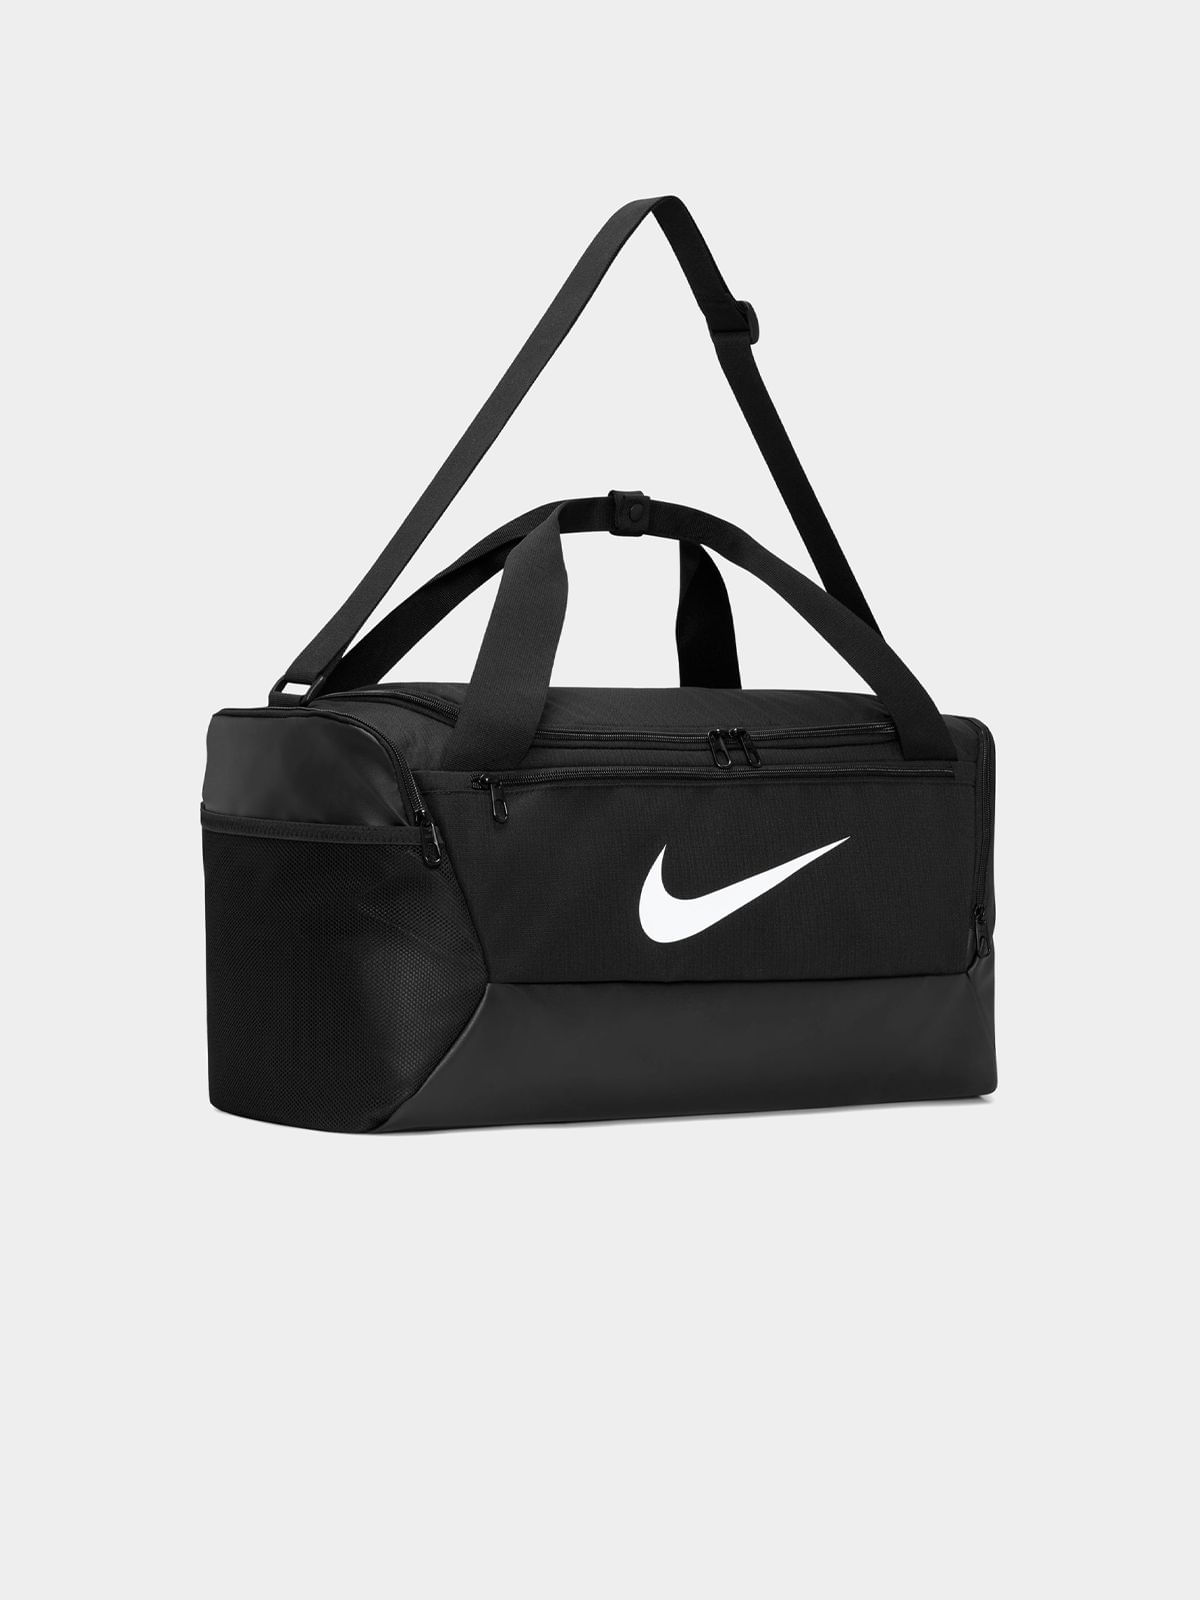 Nike Brasilia Small Training Duffel Bag - Bash.com